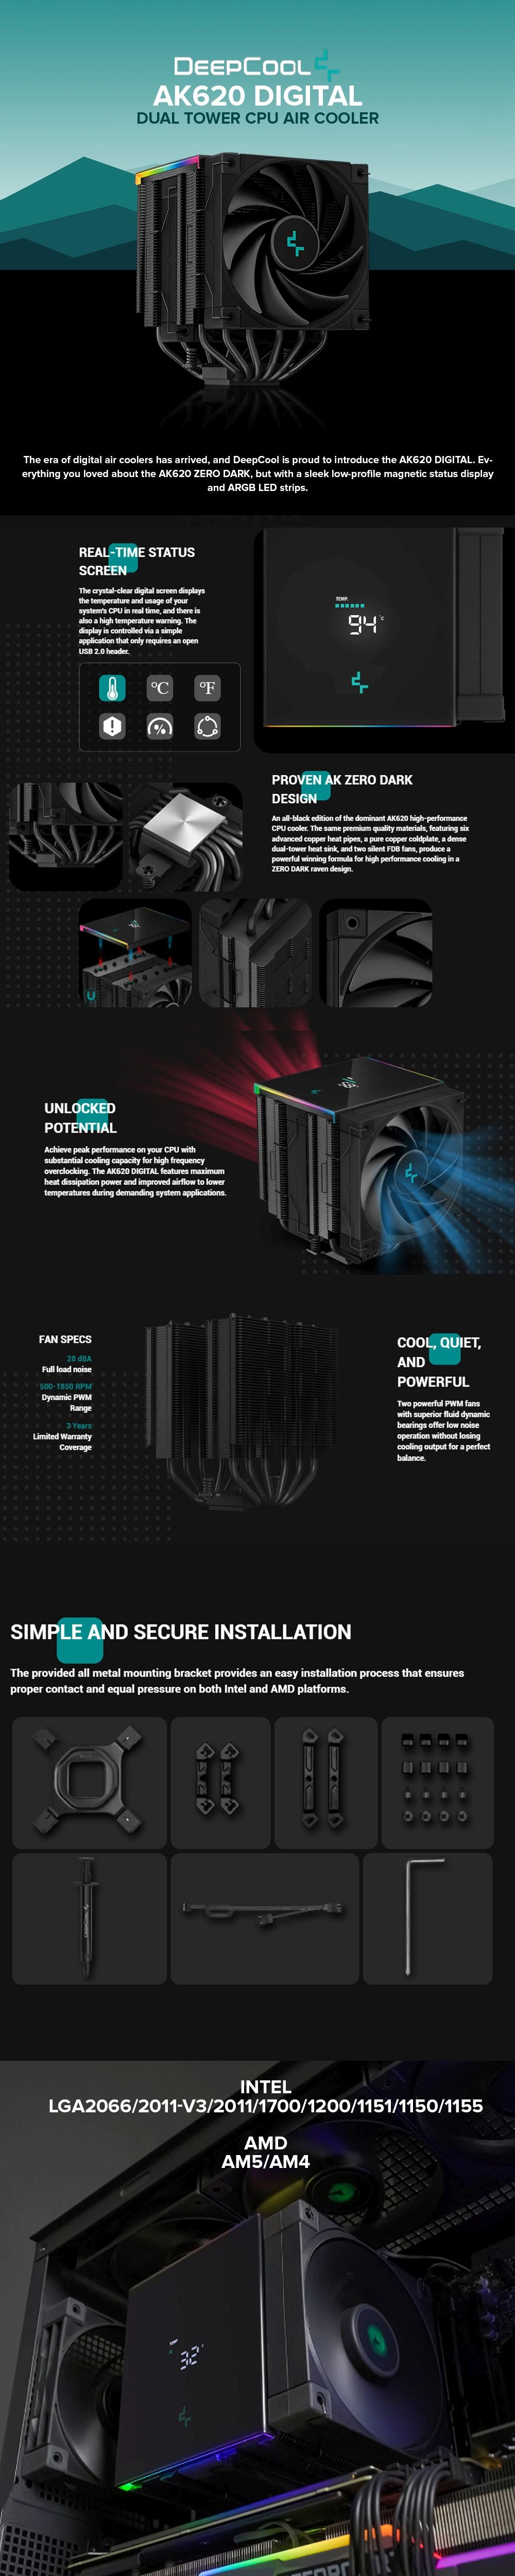 Deepcool AK620 Digital dual tower CPU Air Cooler – EasyPC